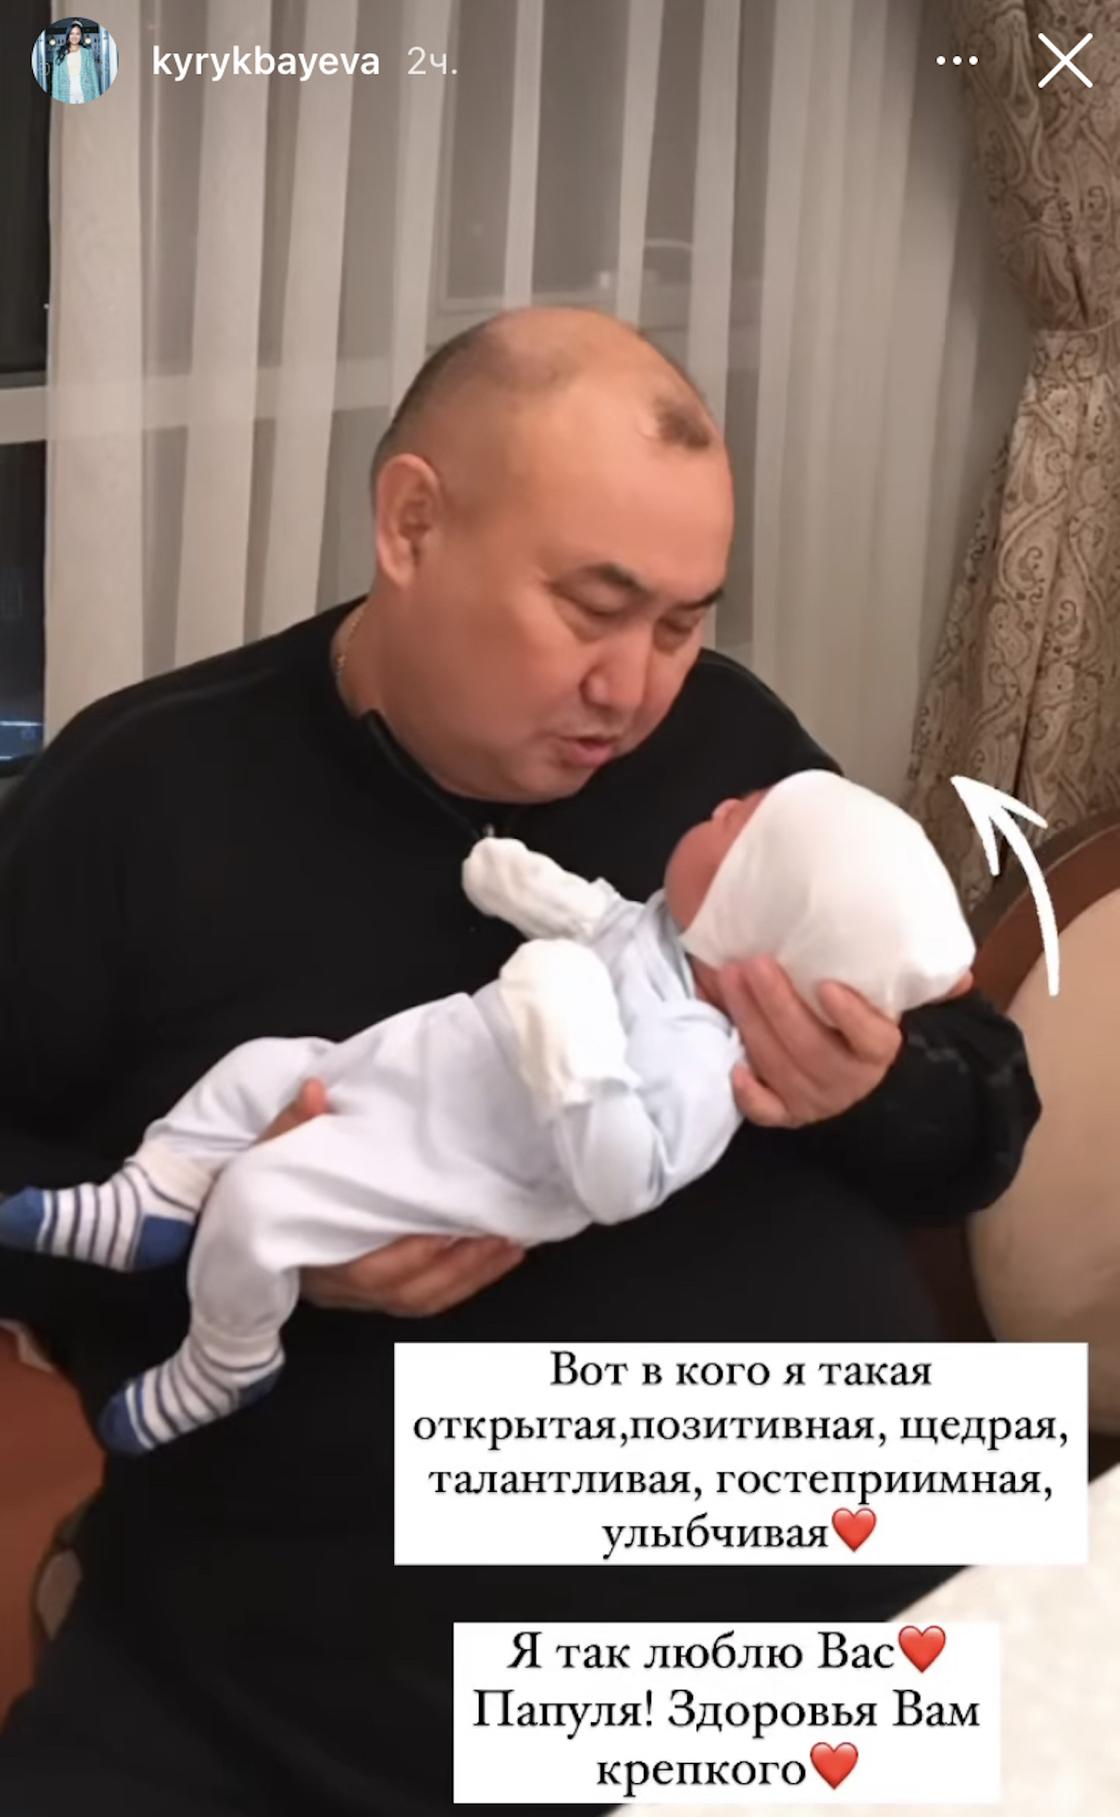 Отец Динары Кырыкбаевой